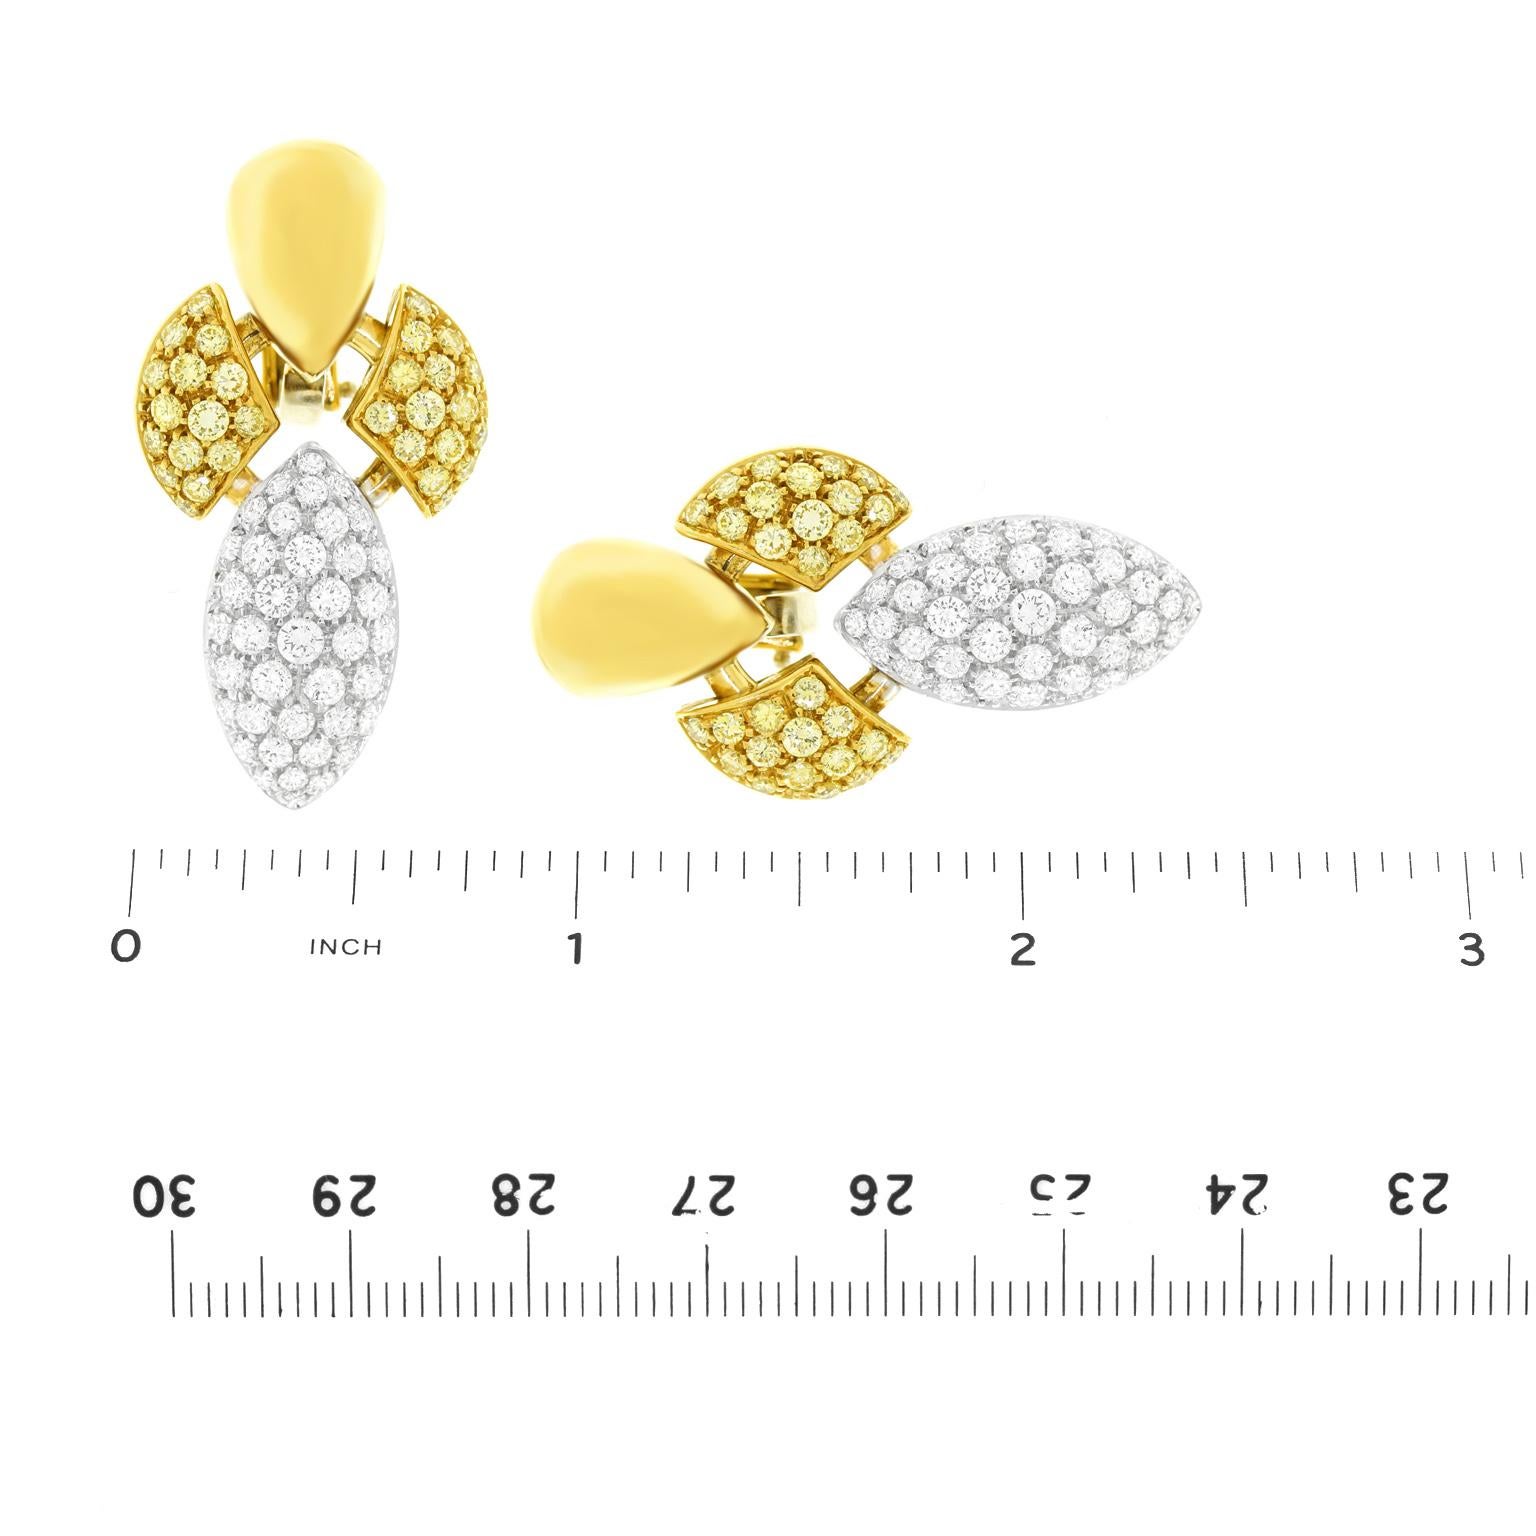 Stunning Yellow and White Diamond Set Gold Fleur-de-lis Earrings 1